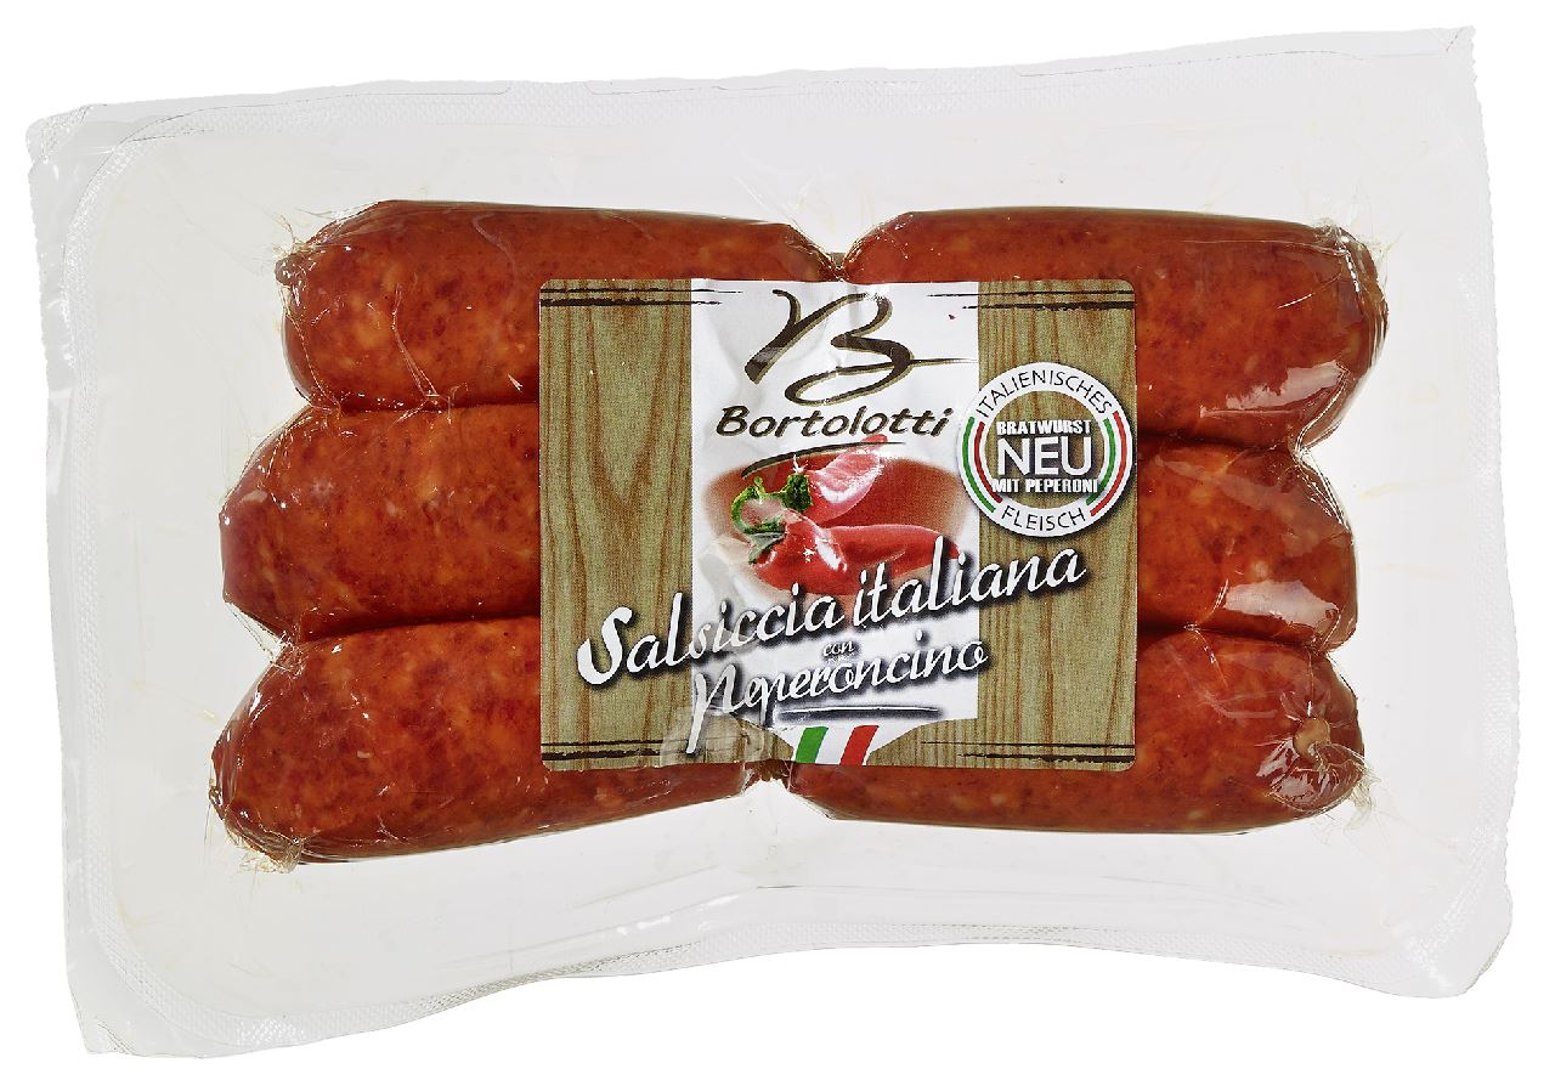 Bortolotti - Salsiccia italiana con peperoncino gekühlt vak.-verpackt - 300 g Packung